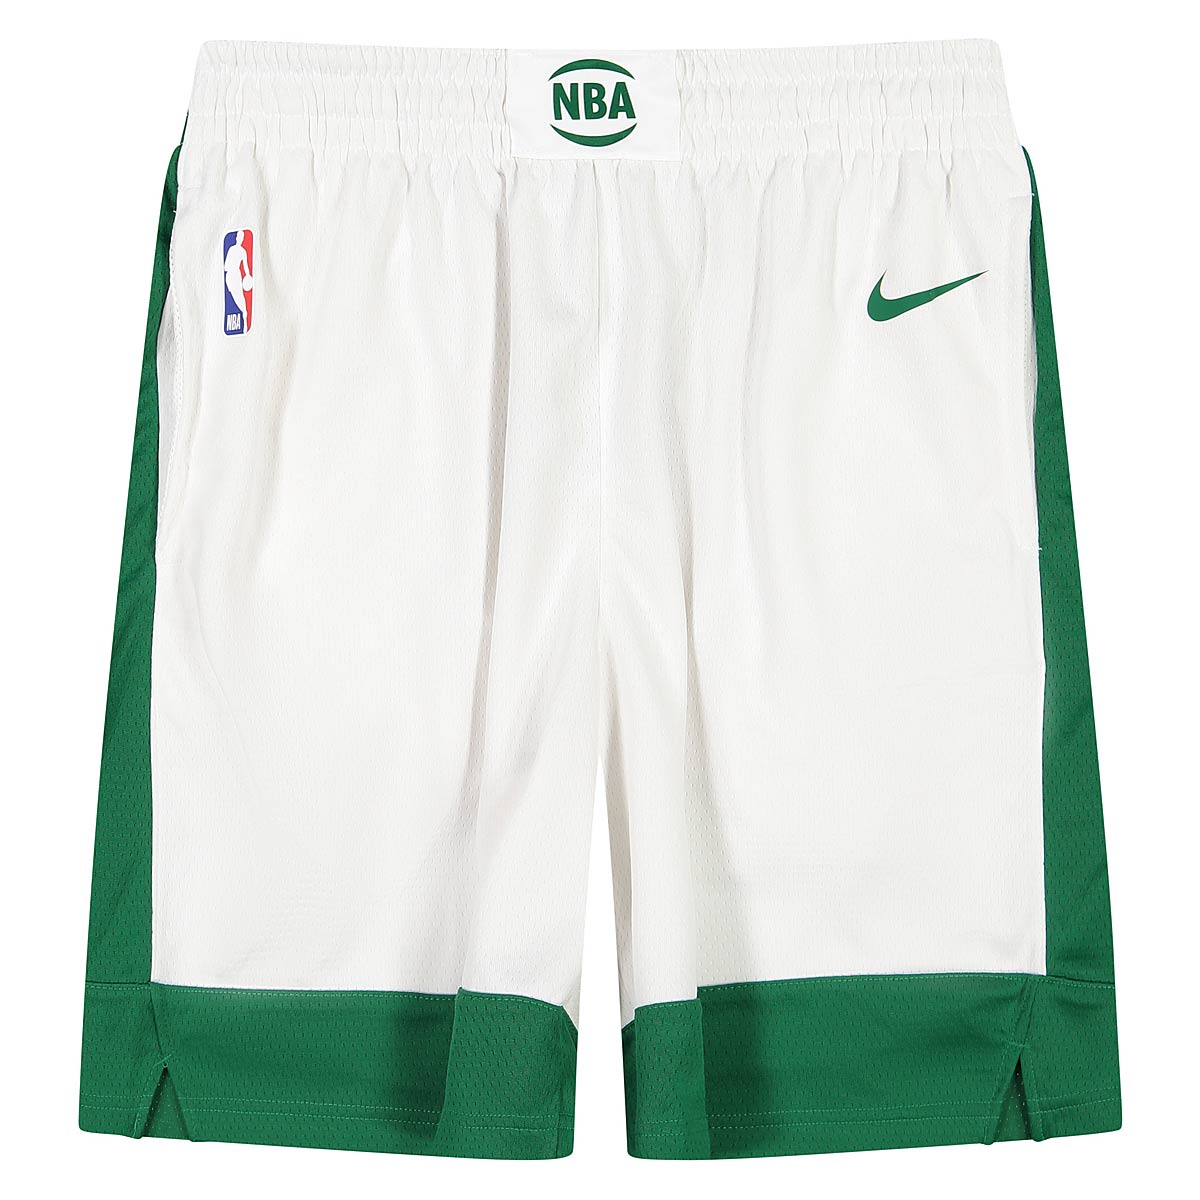 Buy NBA SWINGMAN SHORT BOSTON CELTICS CE 20 for N/A 0.0 on !